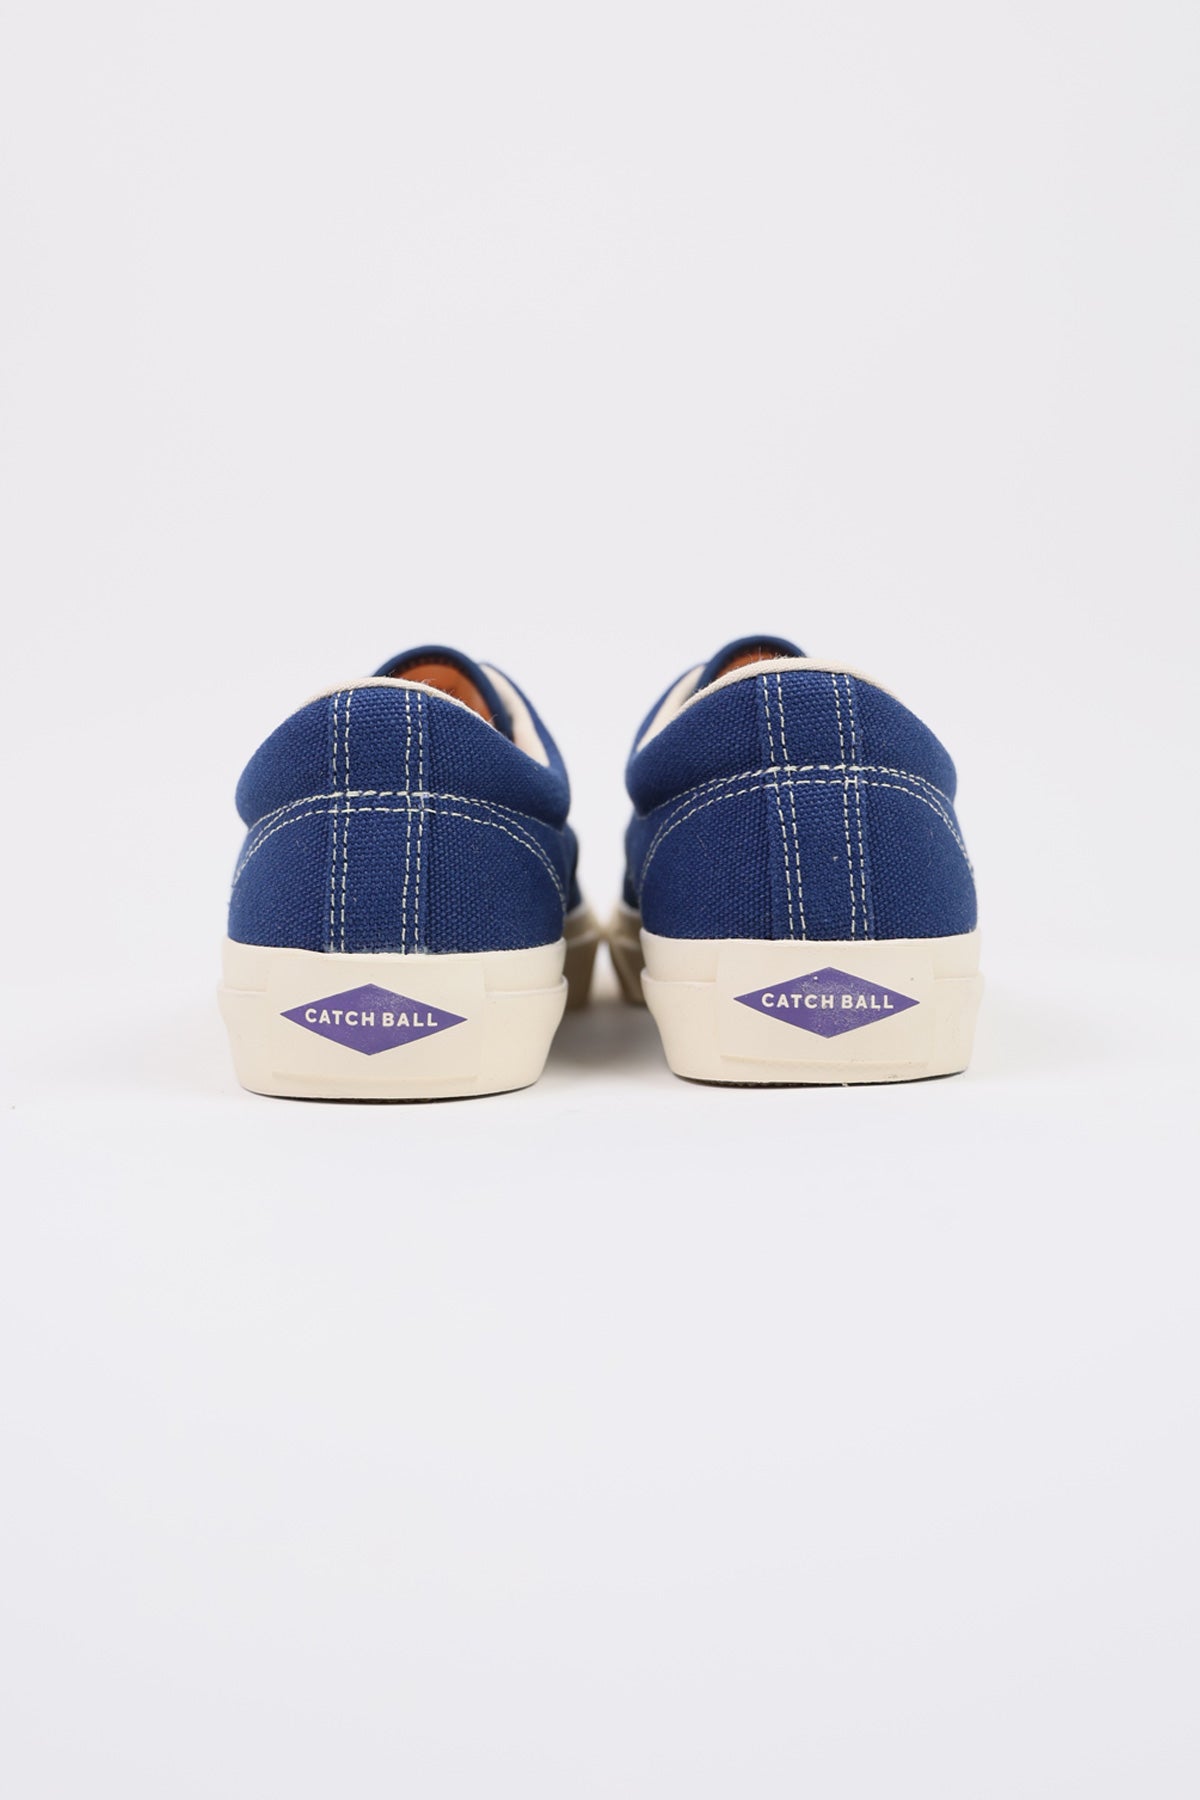 CATCH BALL Original Plus Picnic Low Canvas Sneaker - Navy Blue | Garmentory